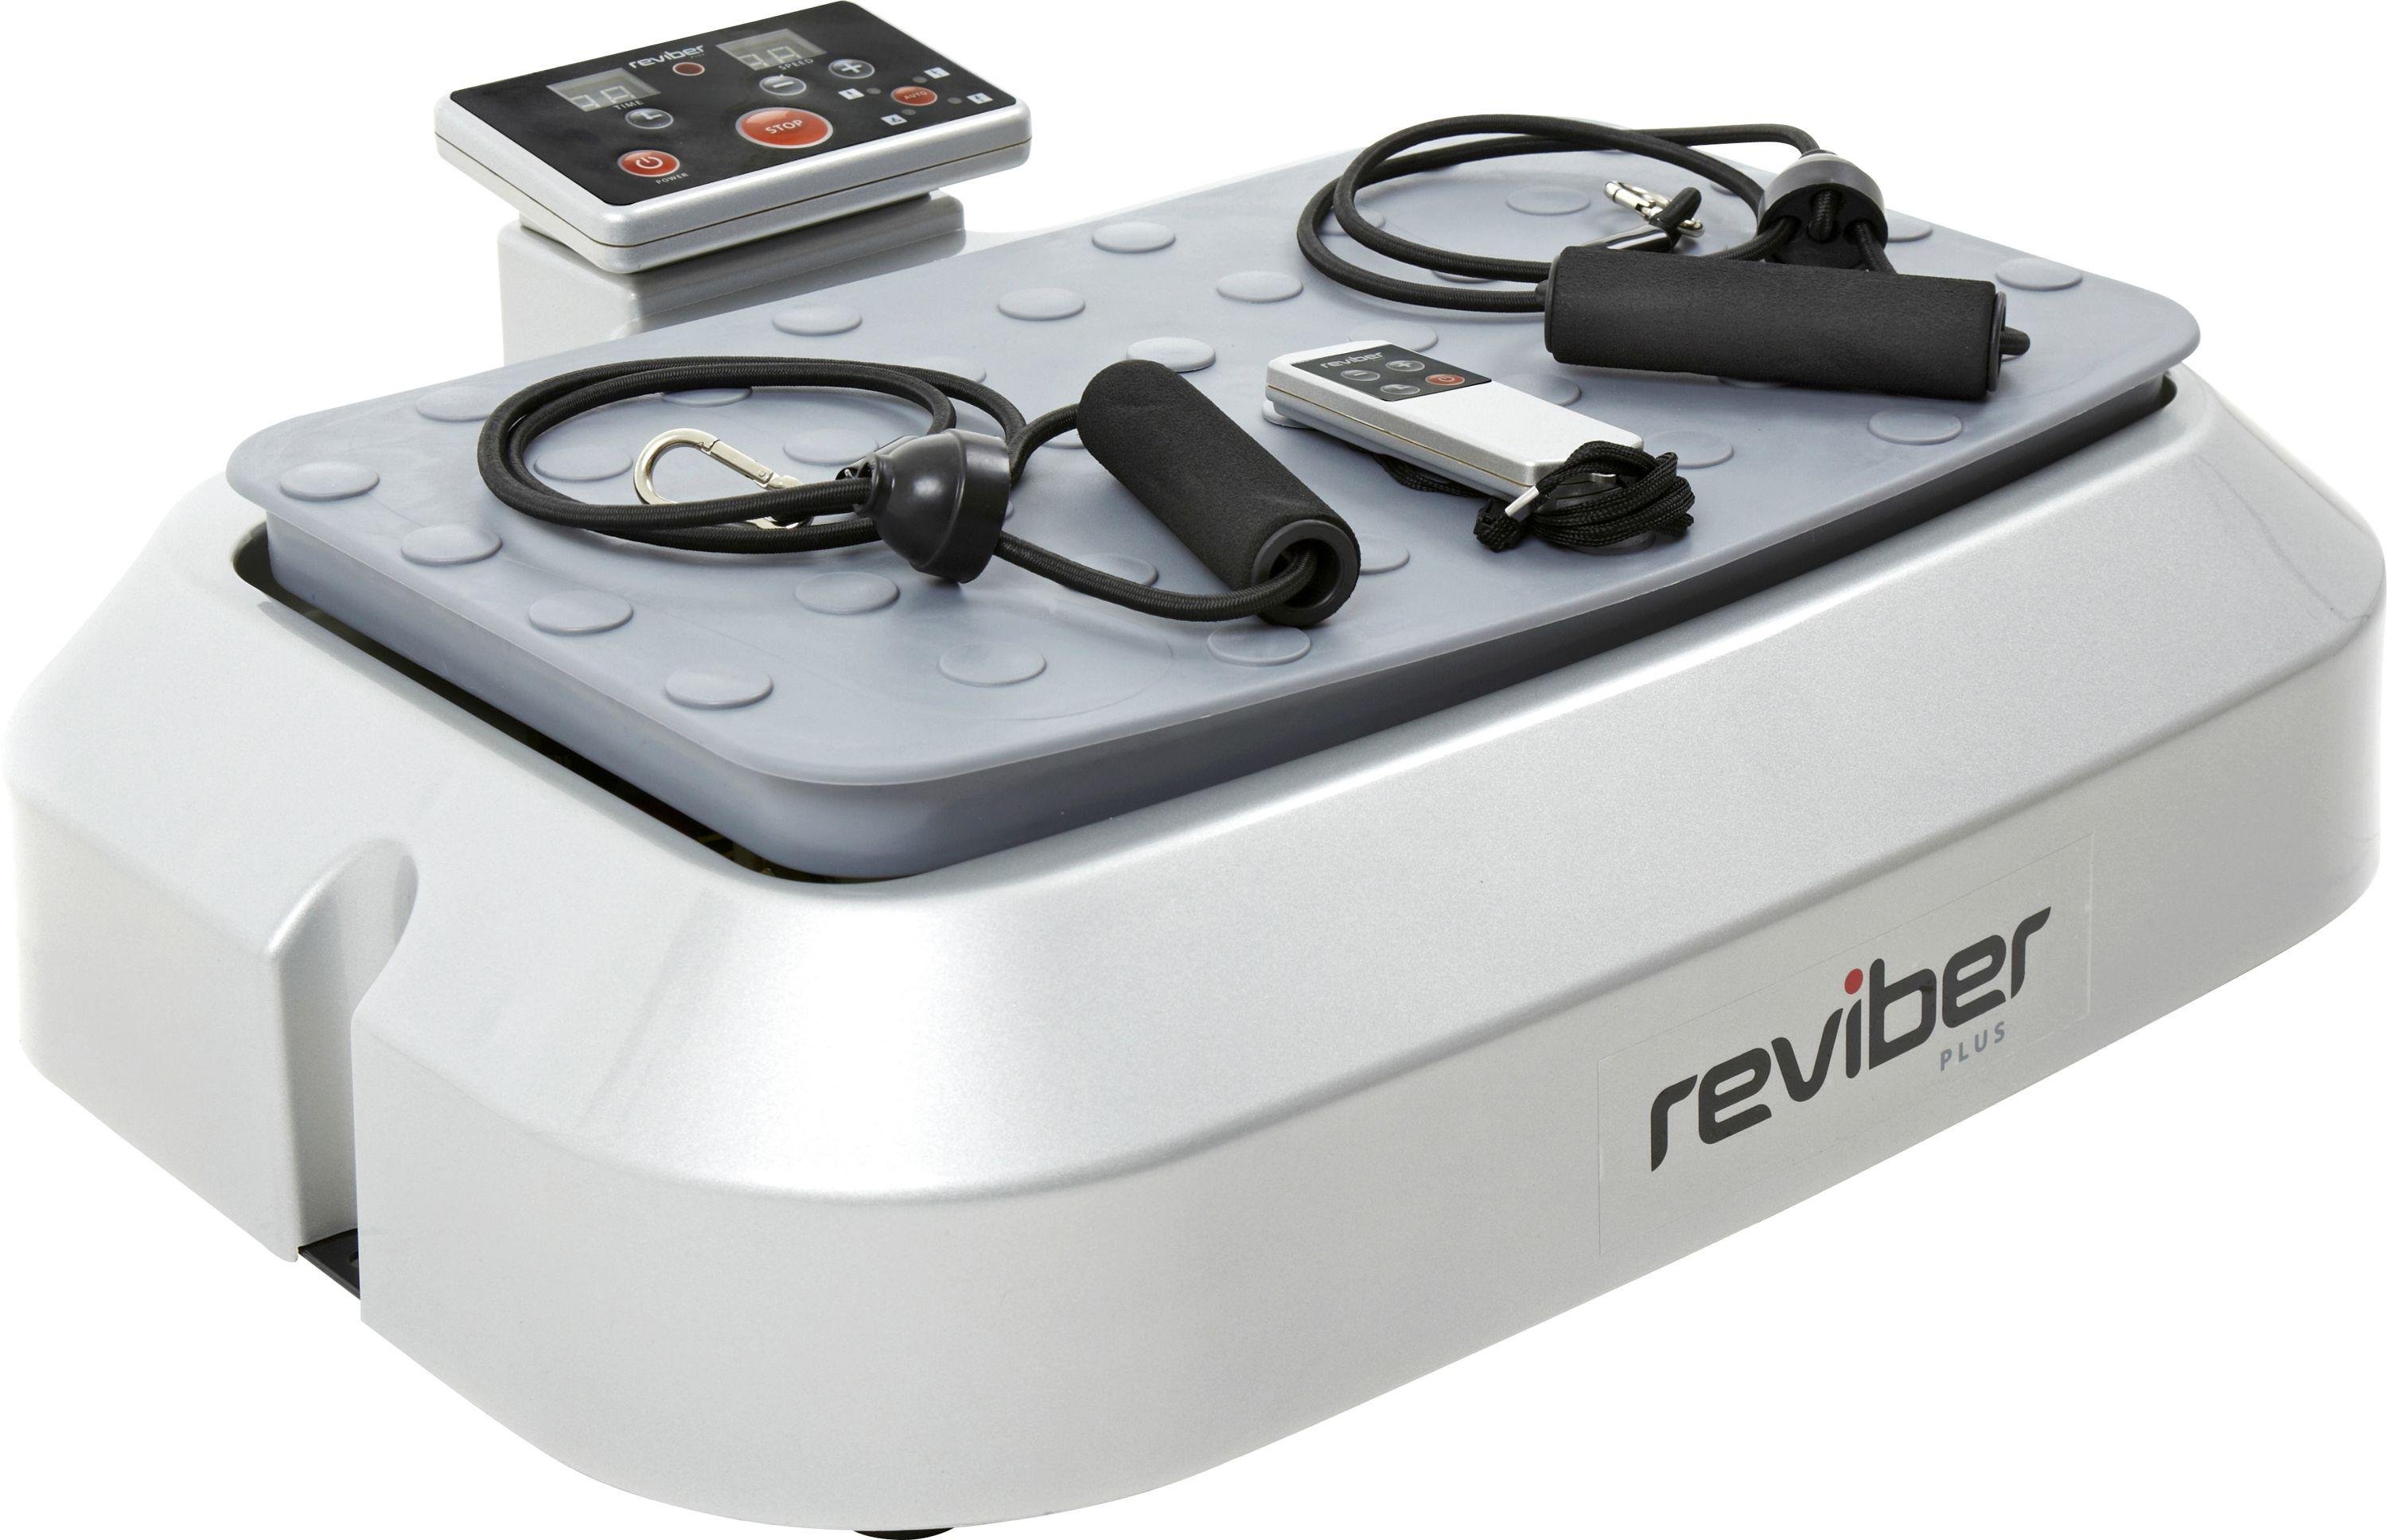 Reviber Plus Vibration Plate Exerciser Review